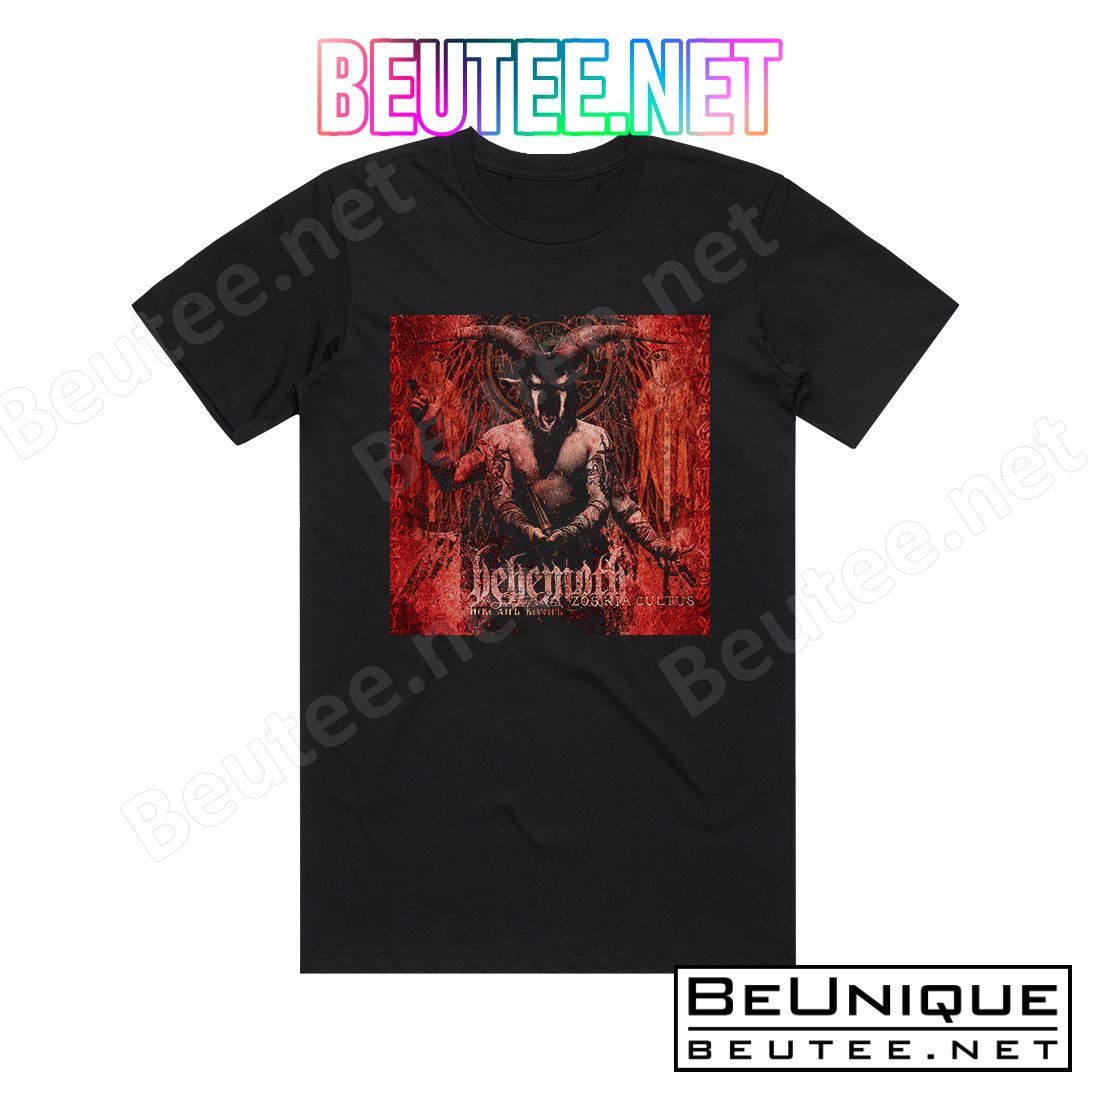 Behemoth Zos Kia Cultus Here And Beyond Album Cover T-Shirt